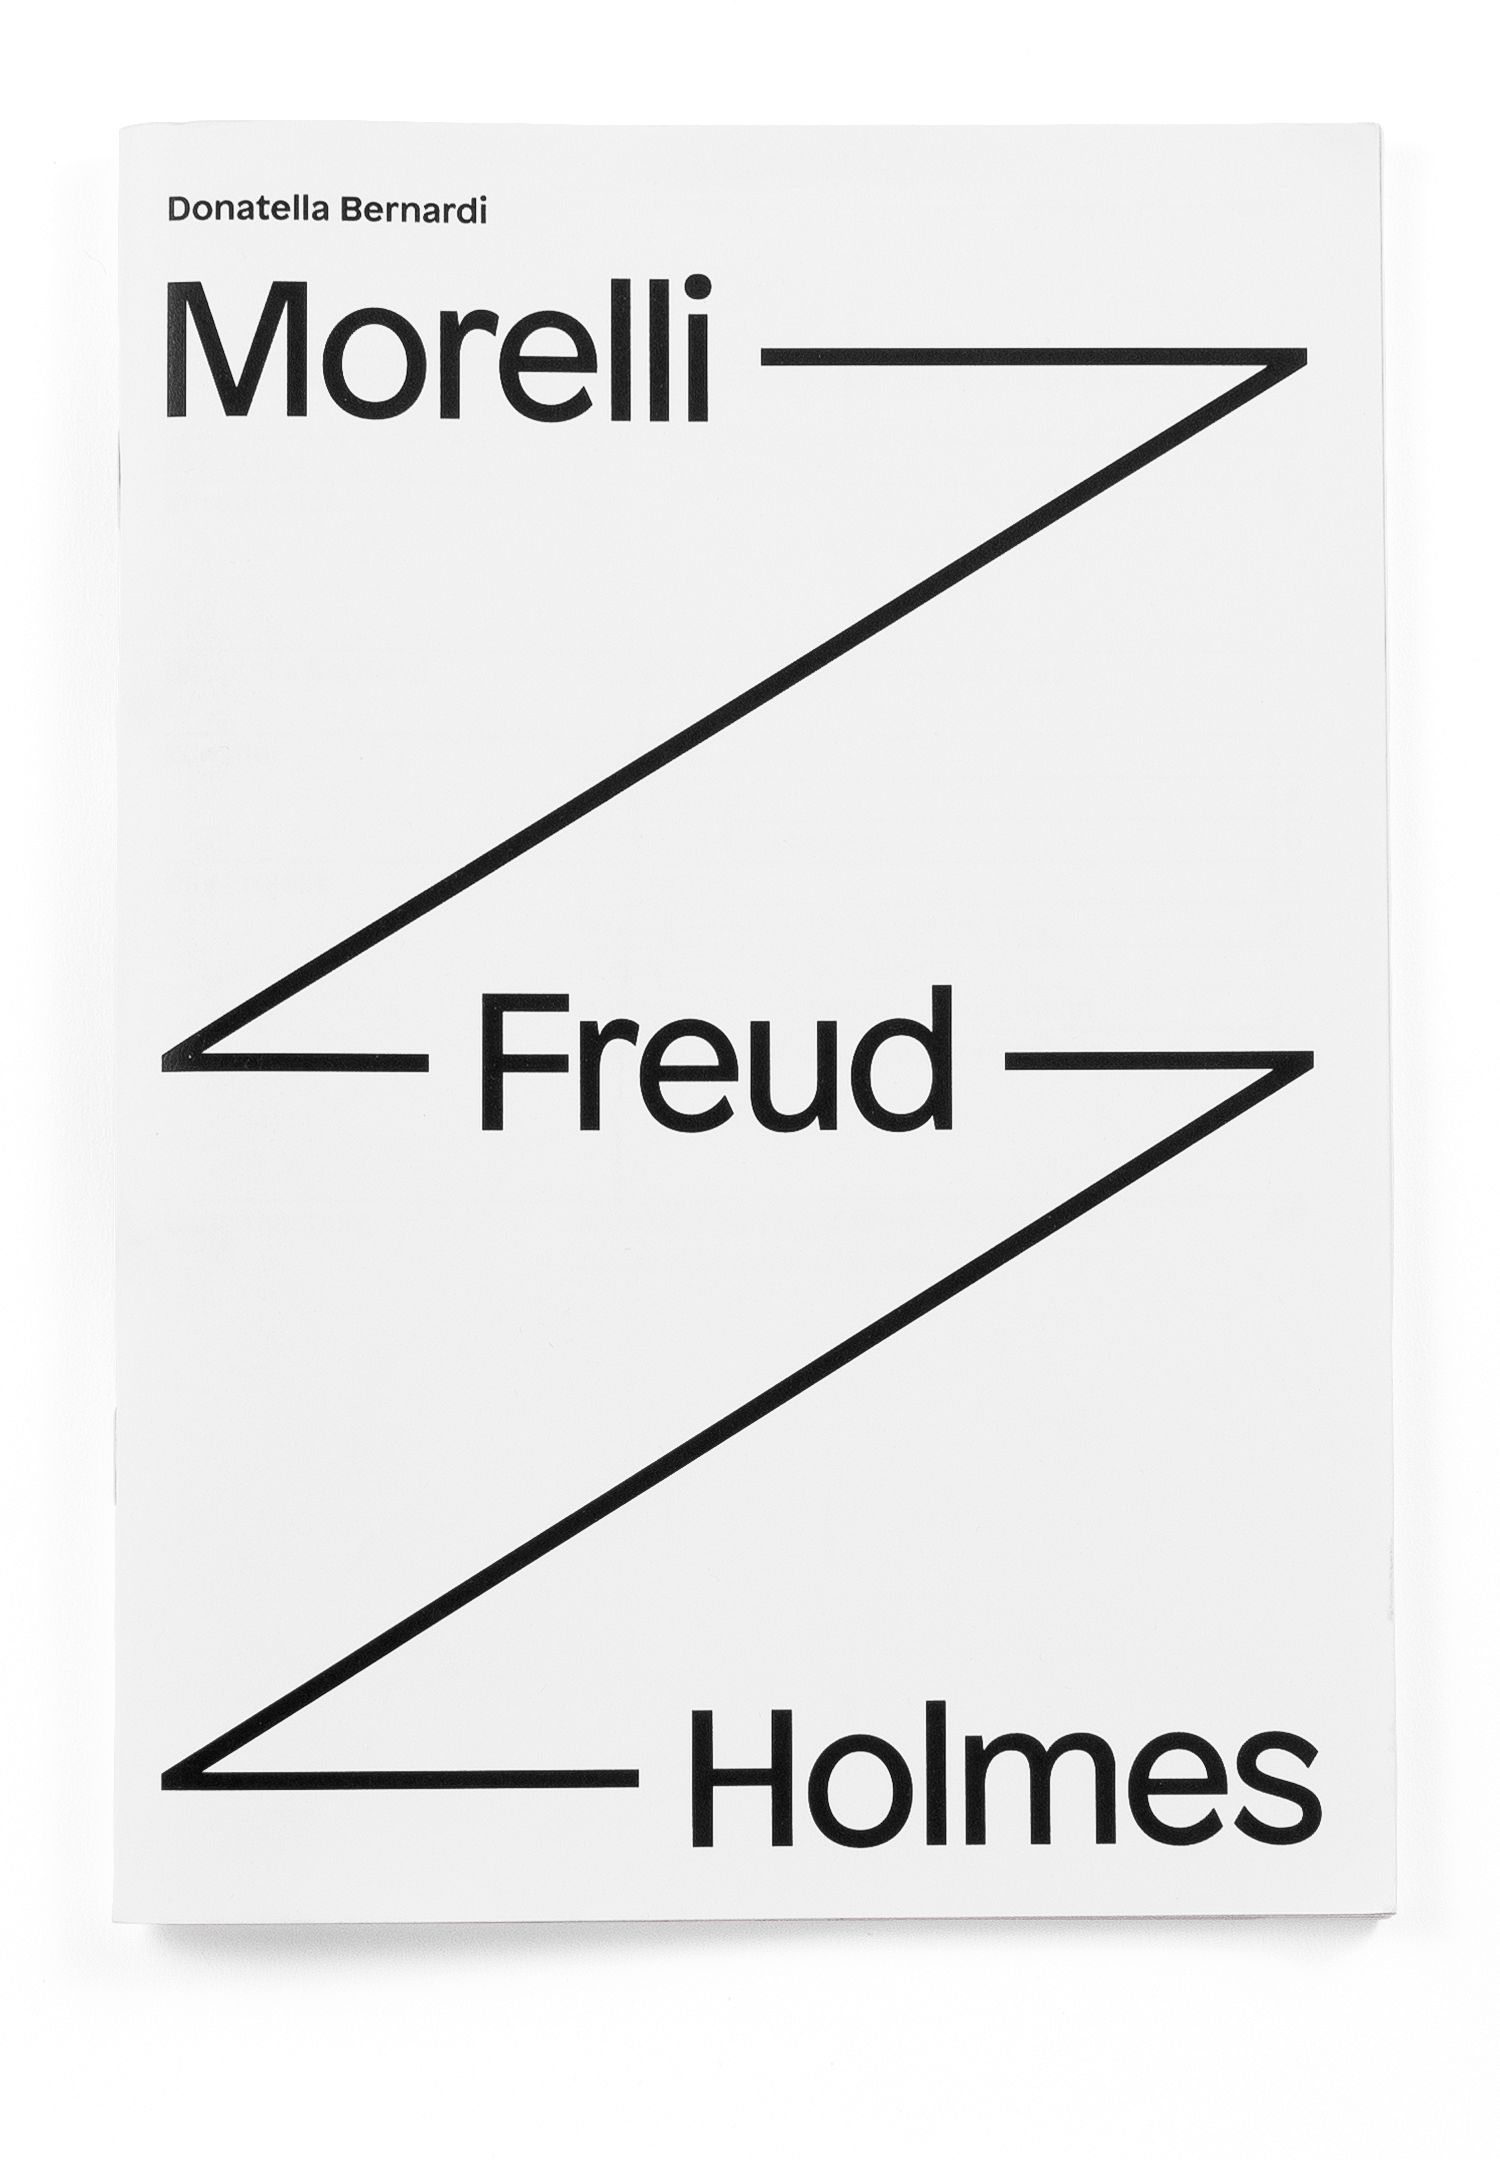 Couverture de la brochure “Morelli-Freud-Holmes" de Donatella Bernardi